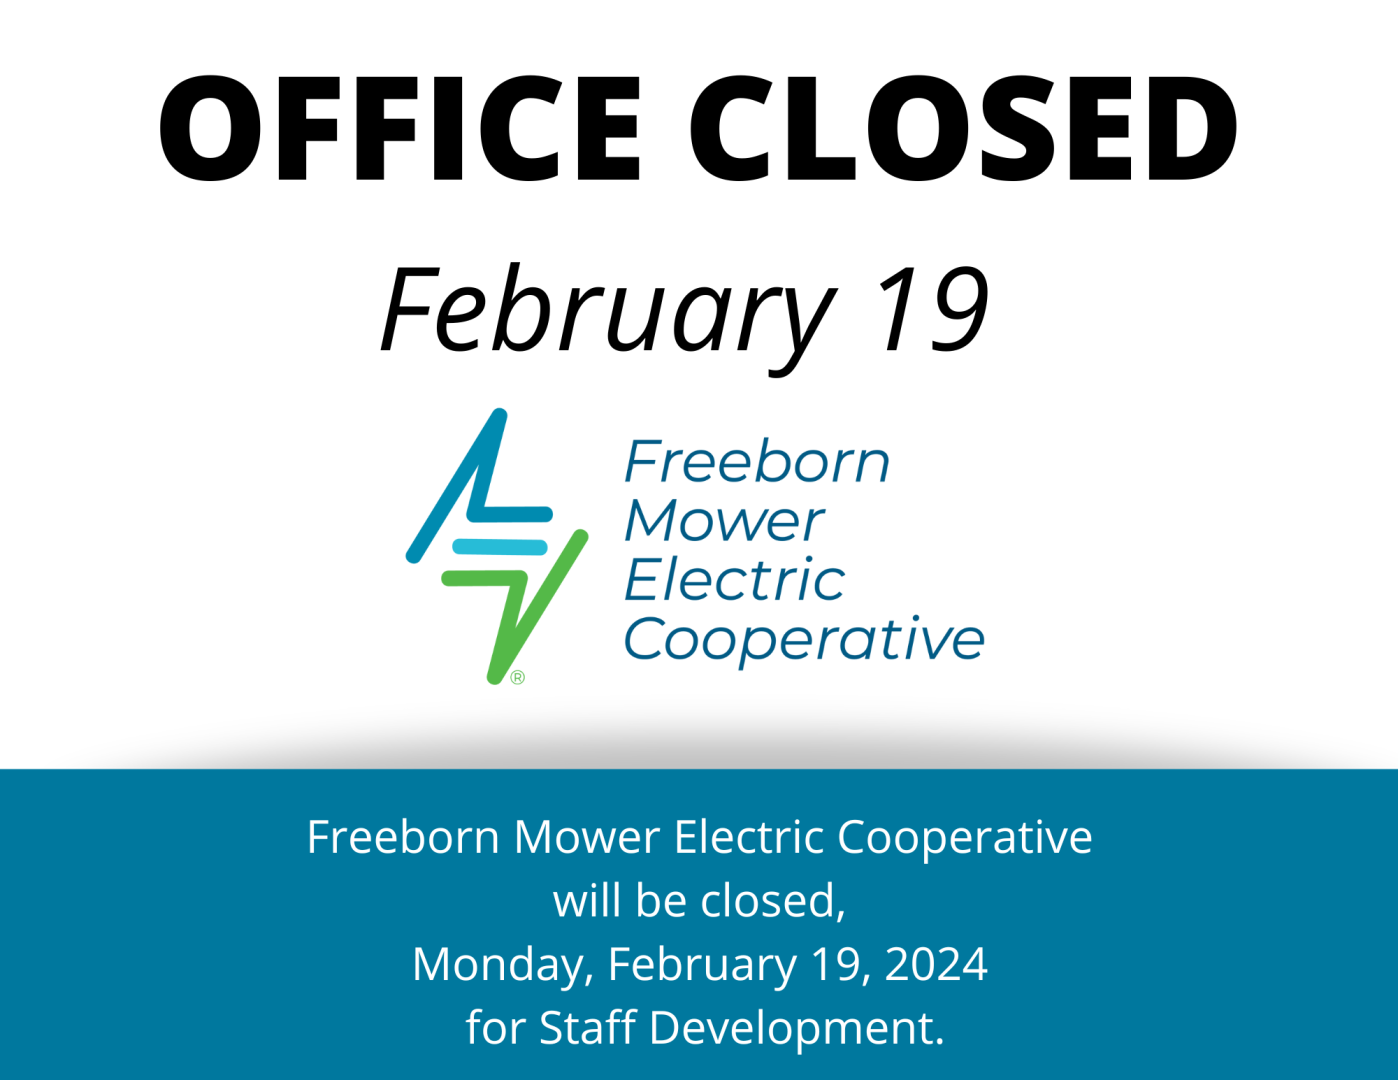 Feb 19 - Office Closed